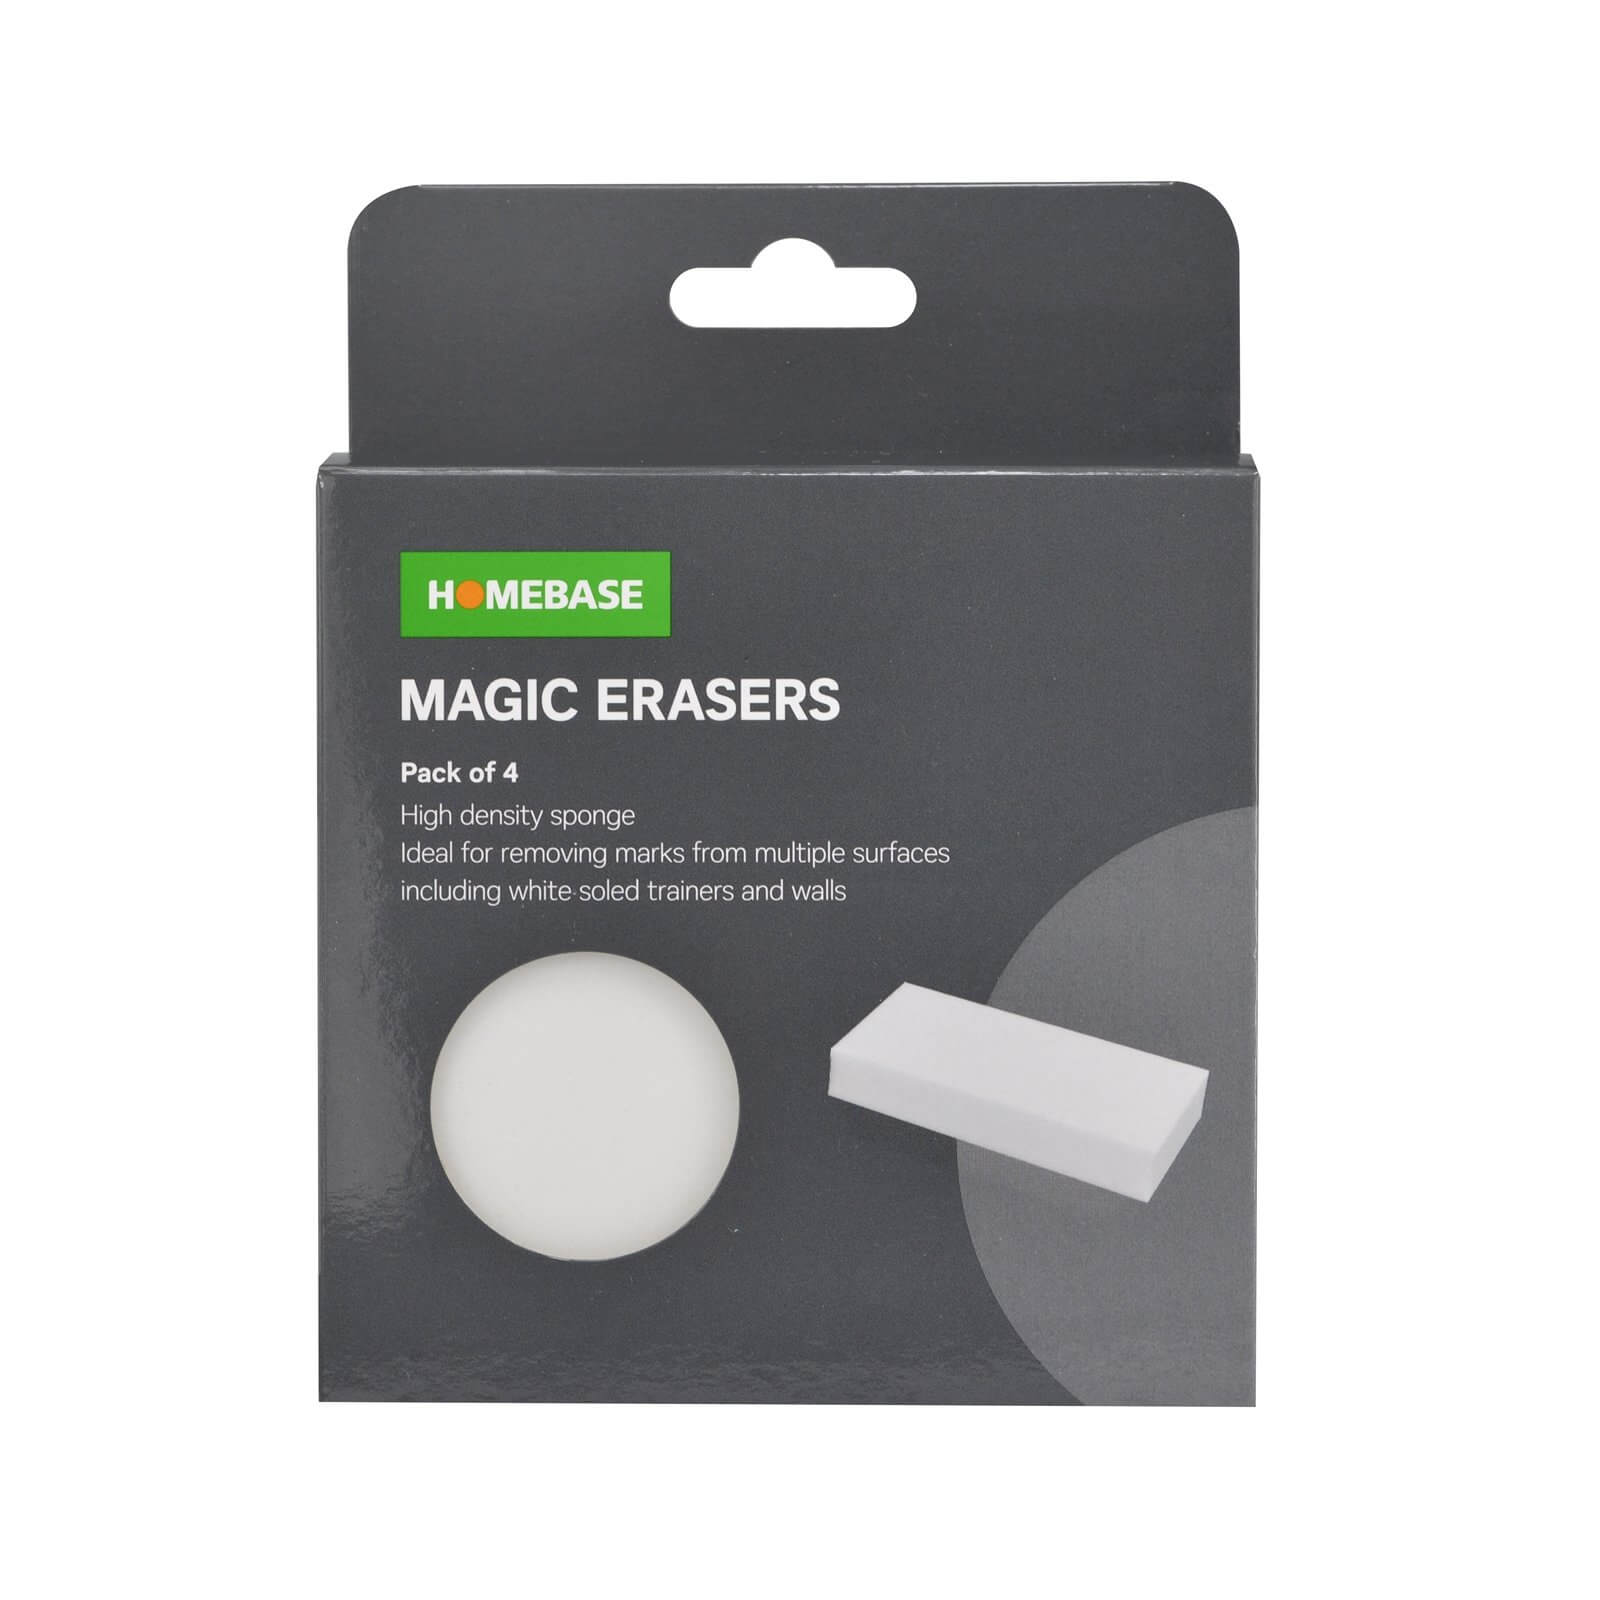 4 pack of Magic Erasers